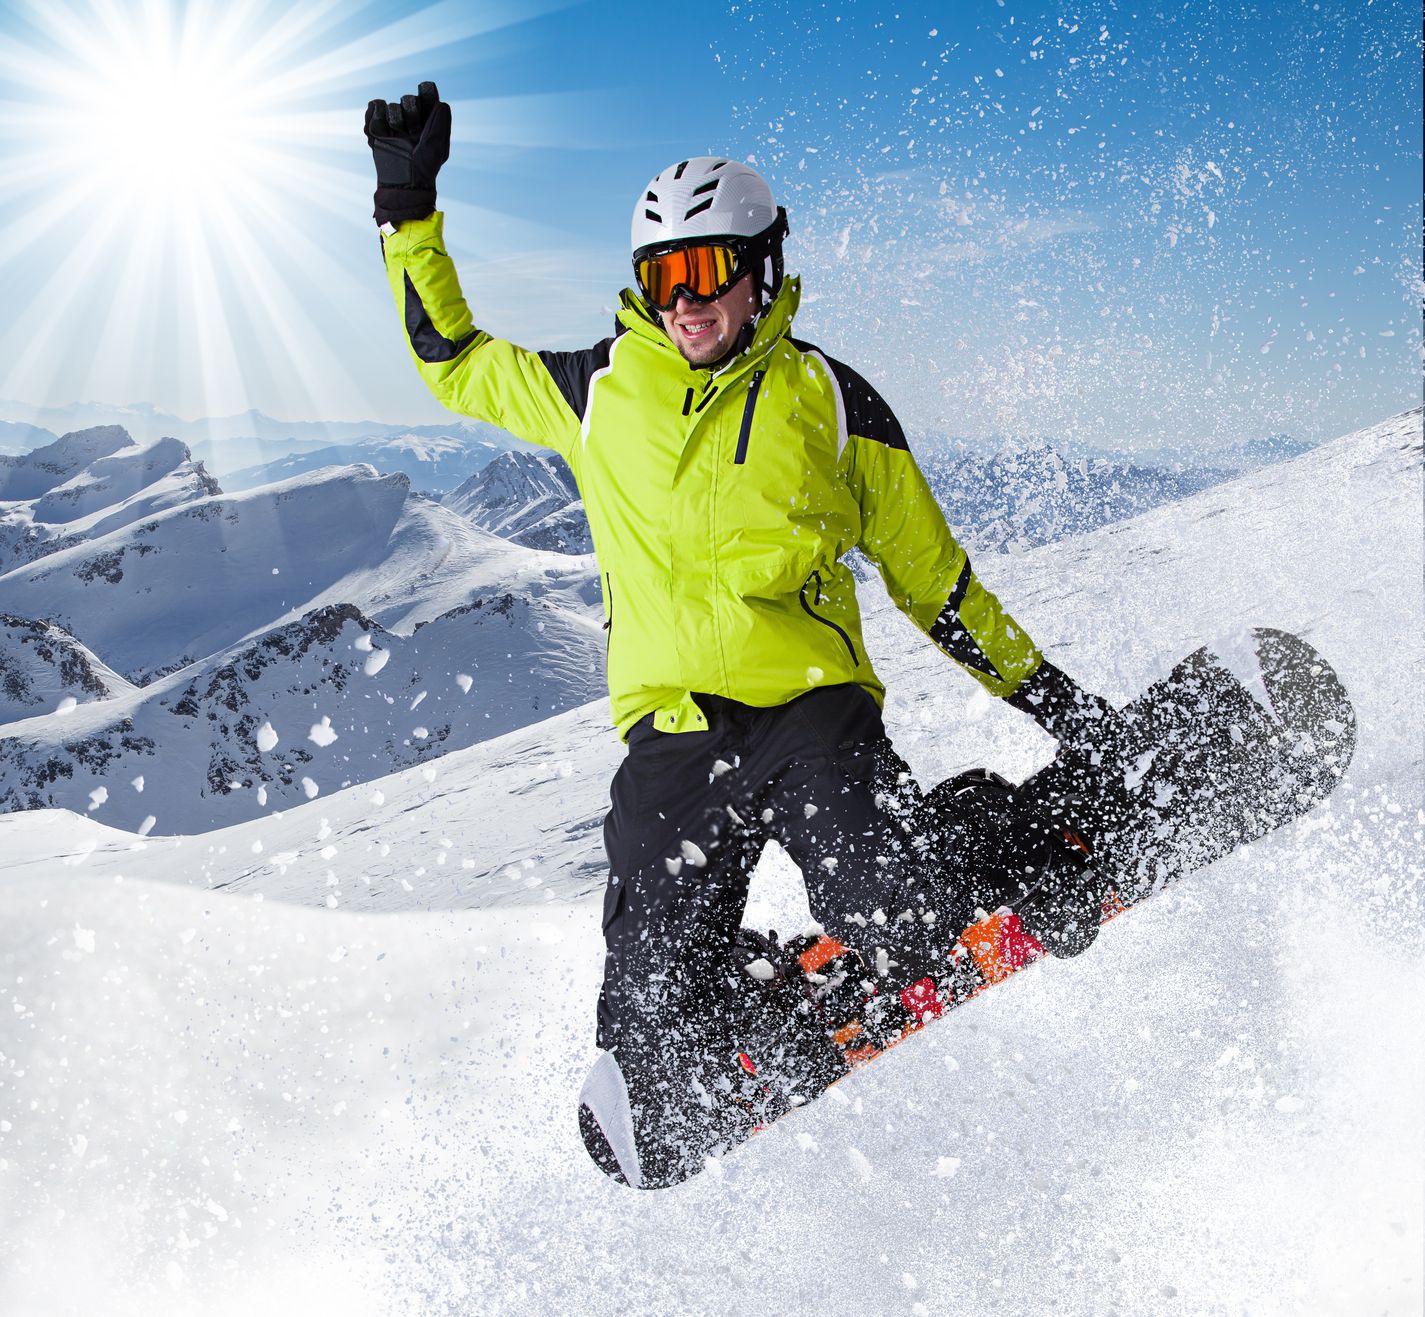 Snowfit ski fitness program